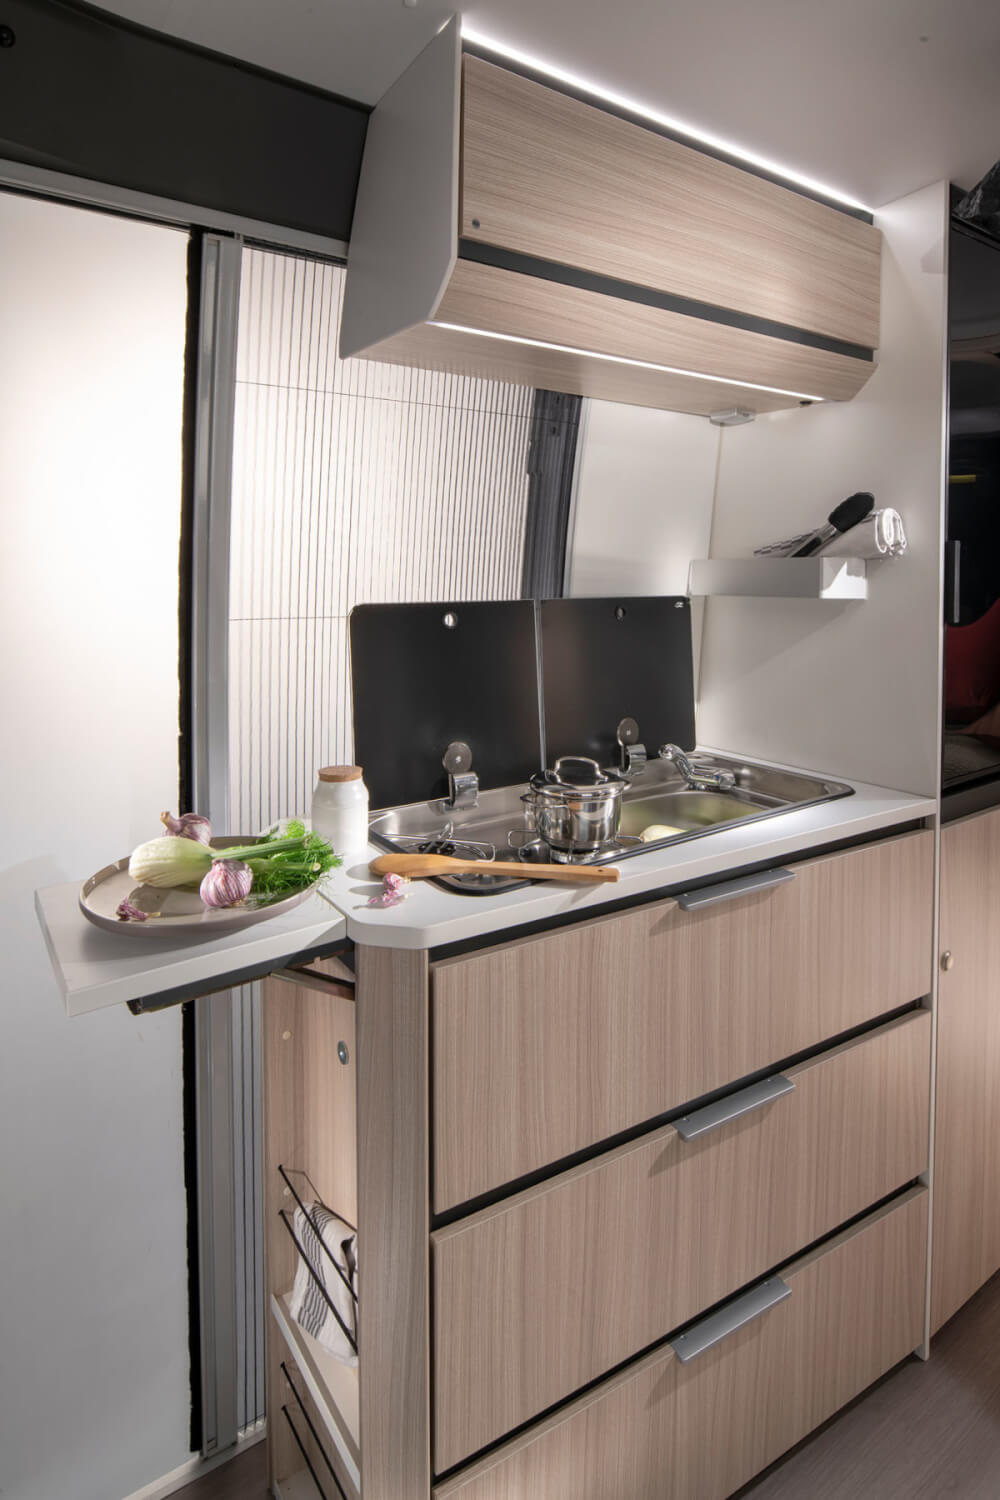 Adria Twin Axess 540 SP (Fiat) Kastenwagen 2021 Küche